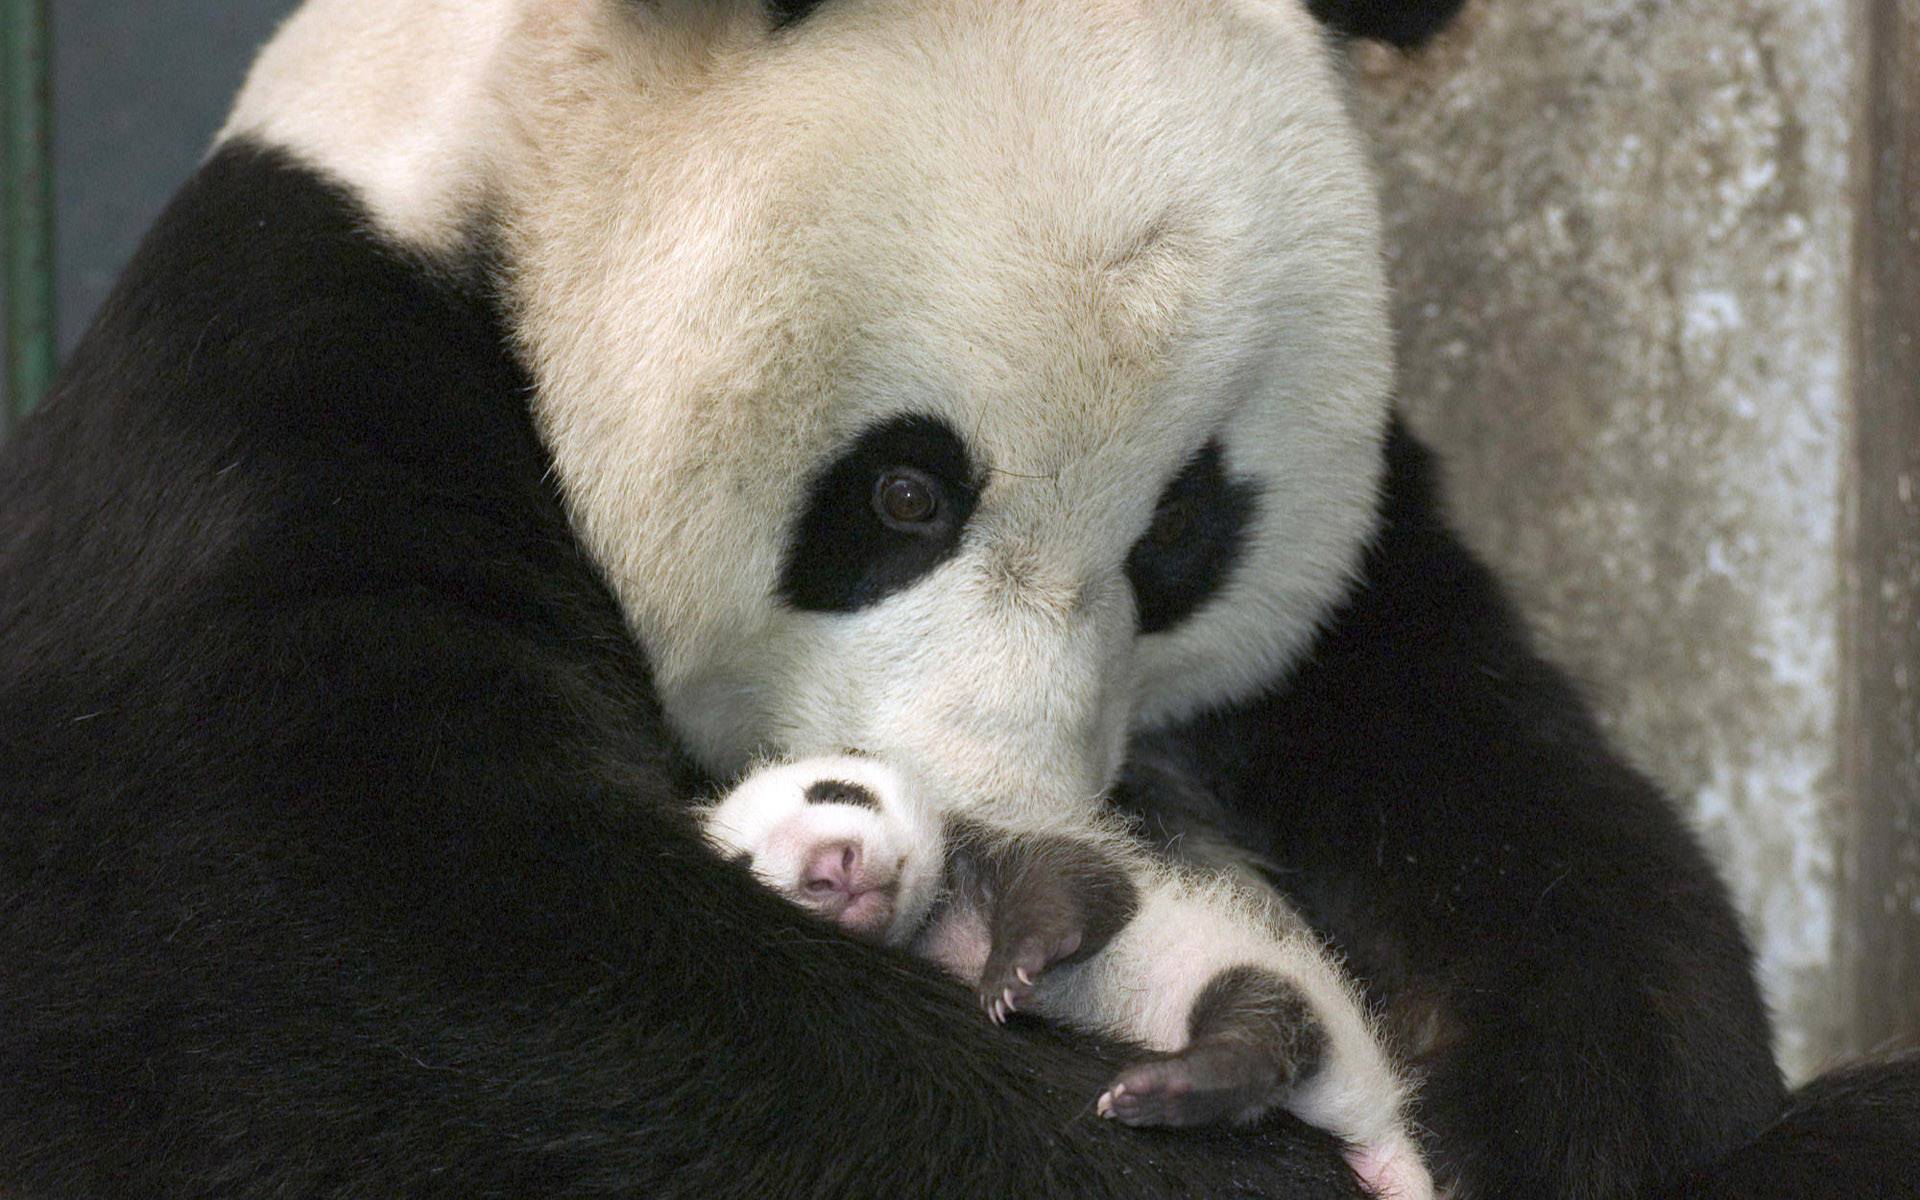 Panda Baby